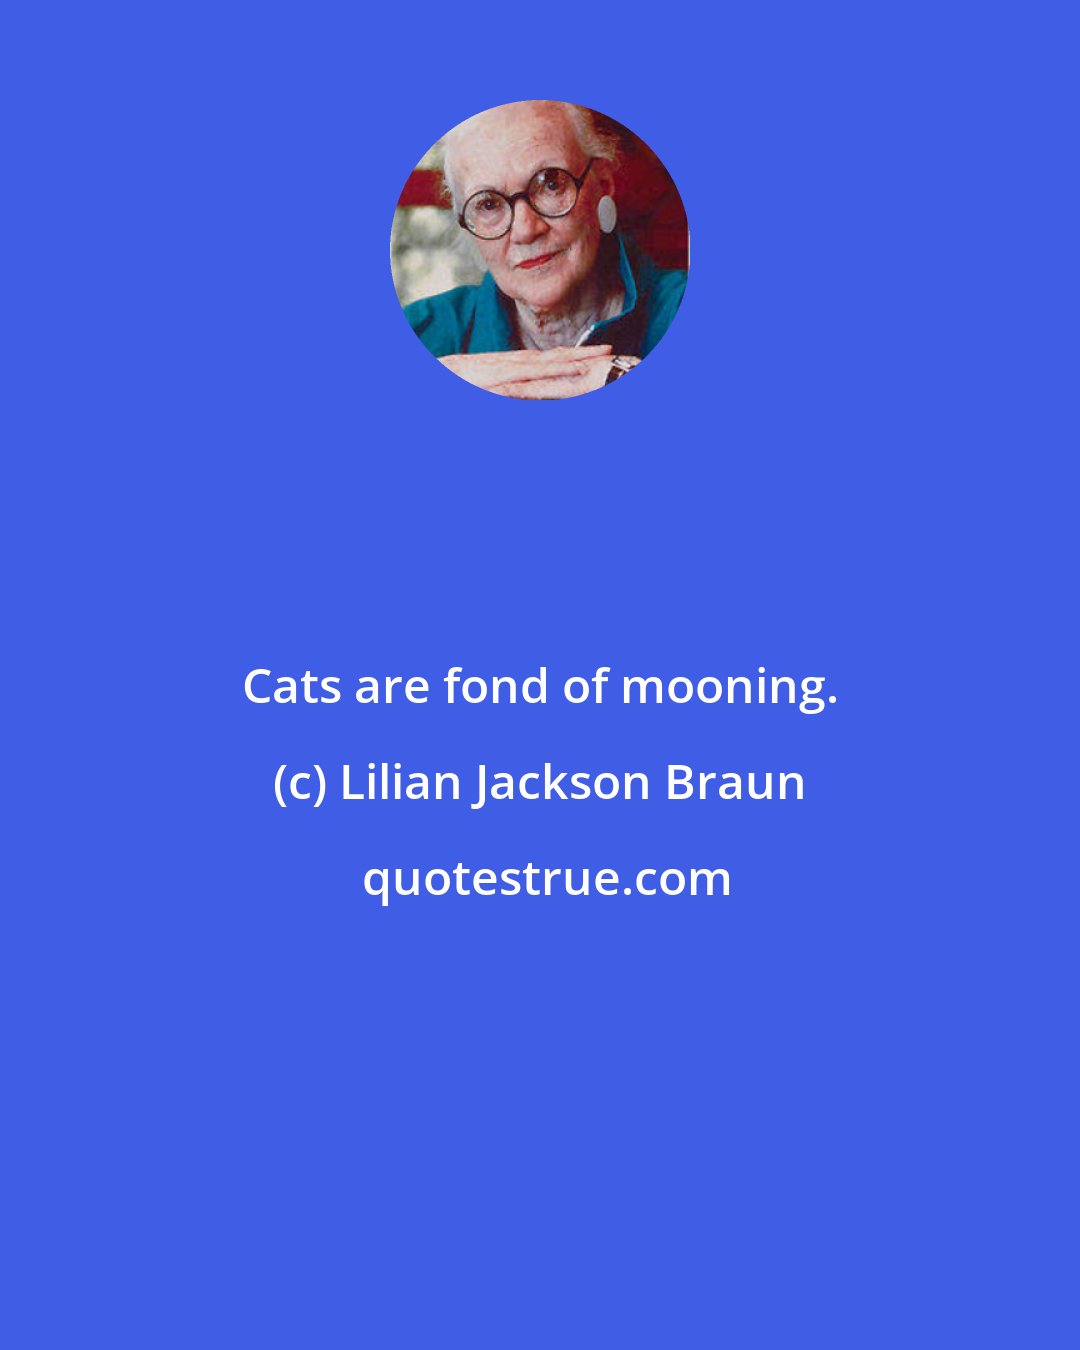 Lilian Jackson Braun: Cats are fond of mooning.